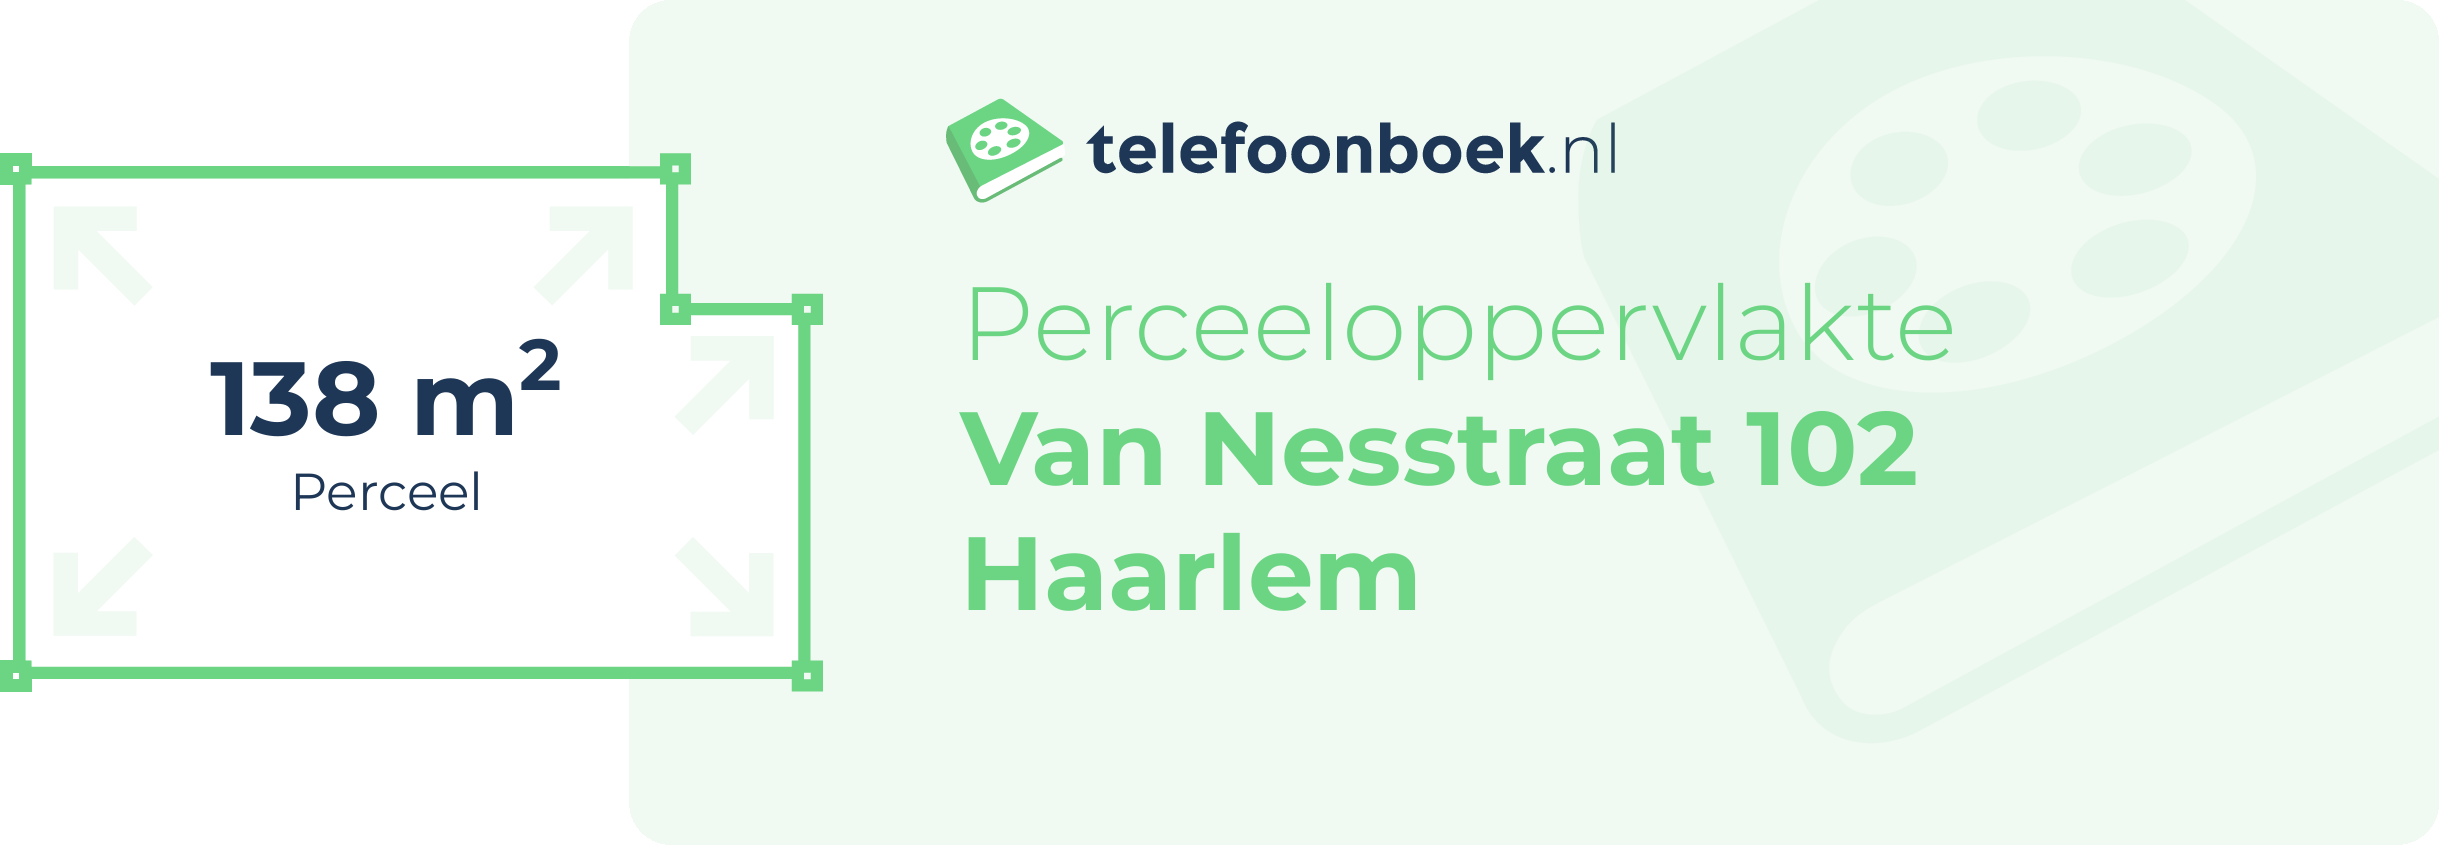 Perceeloppervlakte Van Nesstraat 102 Haarlem